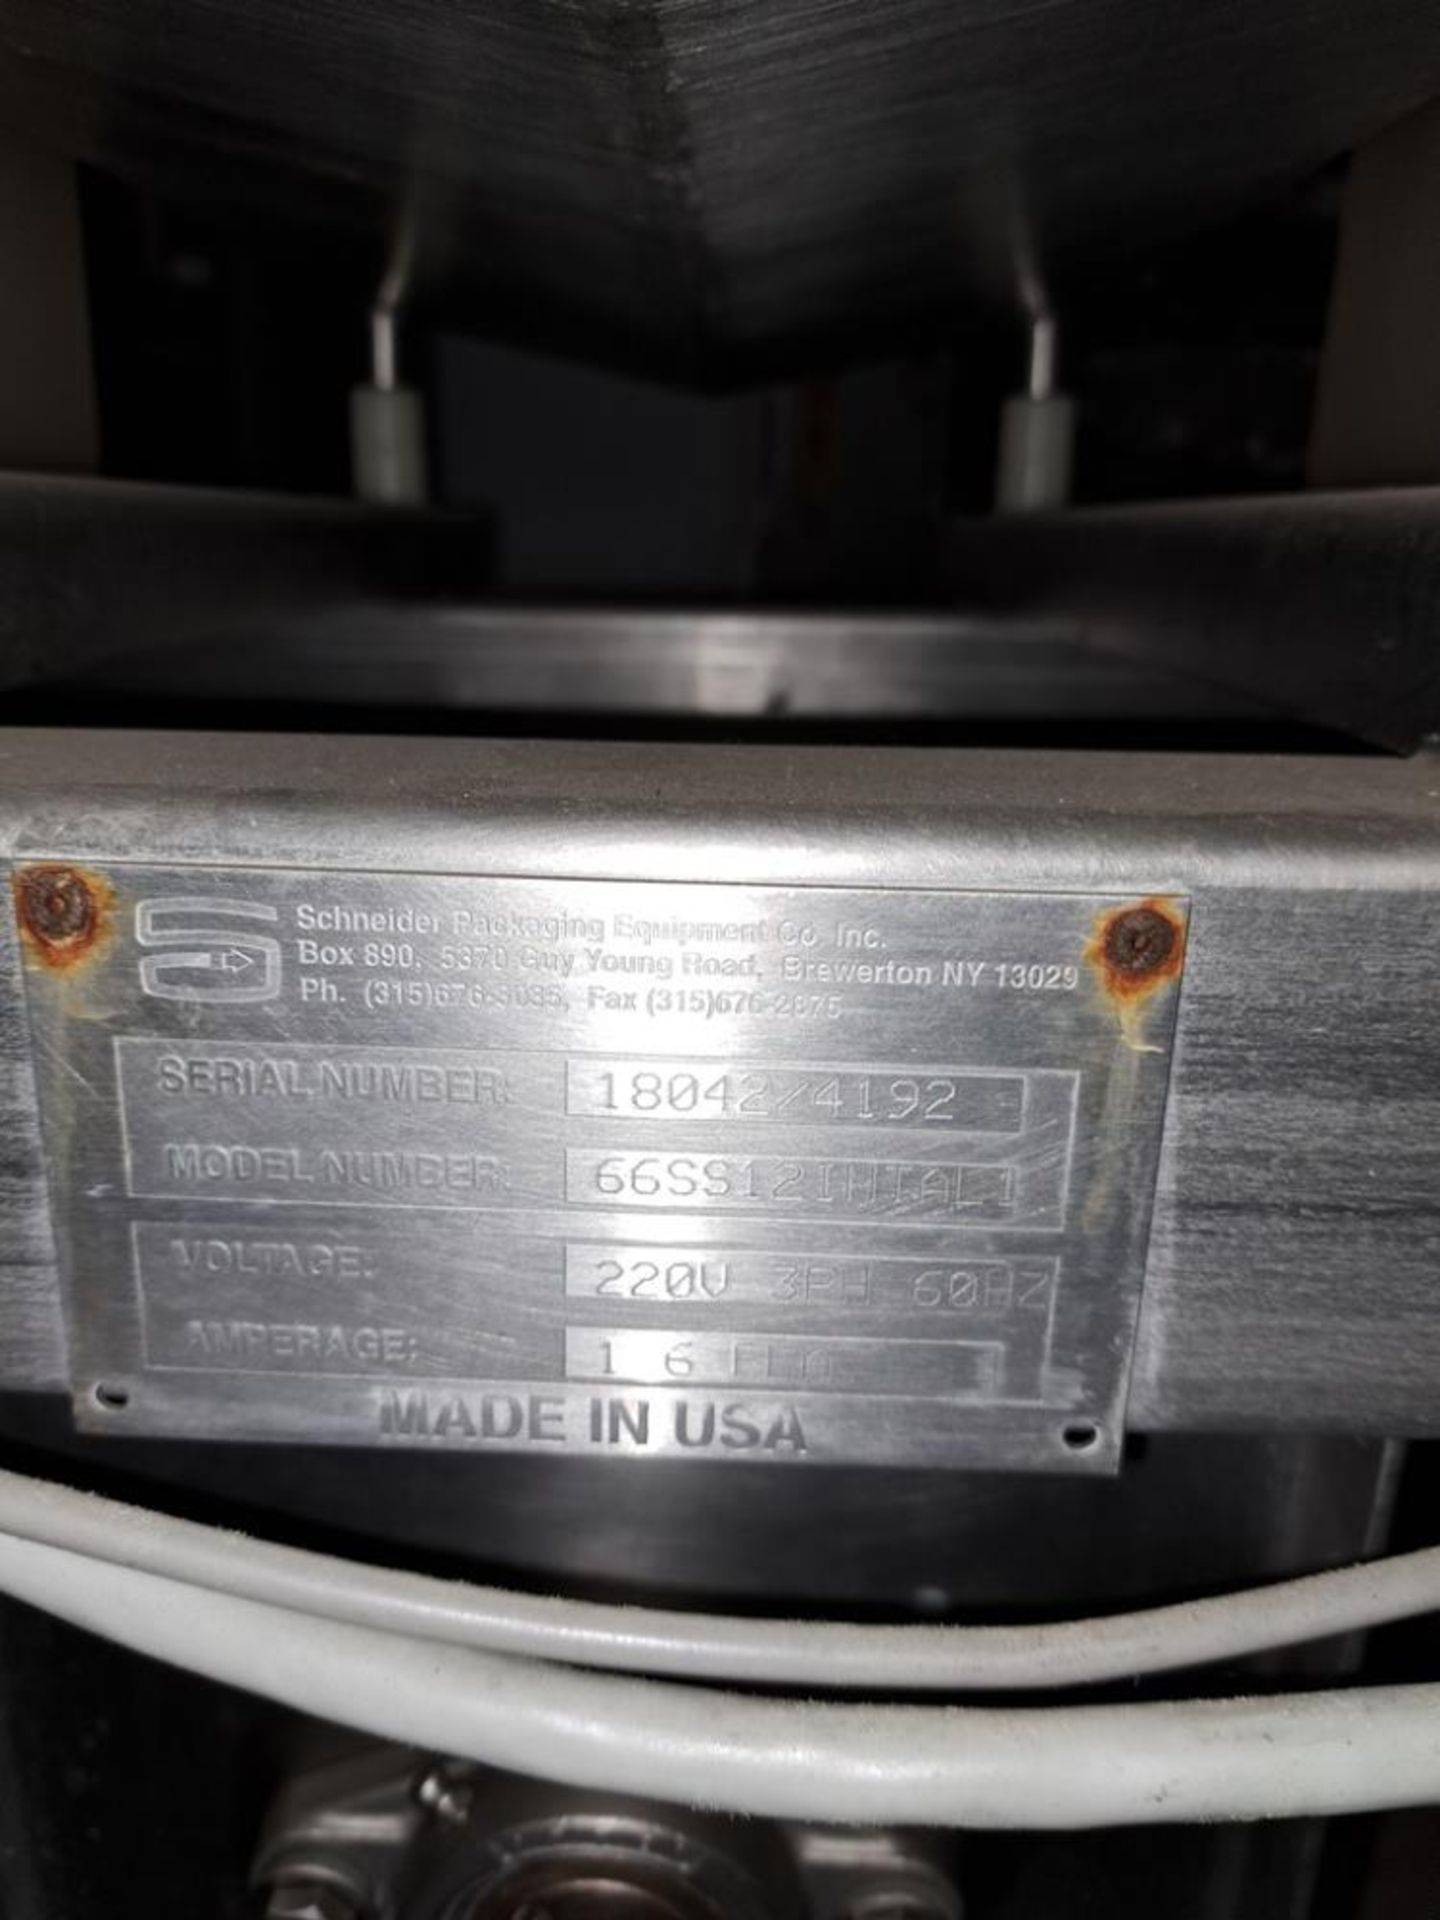 Goring Kerr Mdl. 66SS12 INTAL 1 Metal Detector, Ser. #18042/4192, 13 3/4" wide X 5 3/4" high - Image 6 of 6